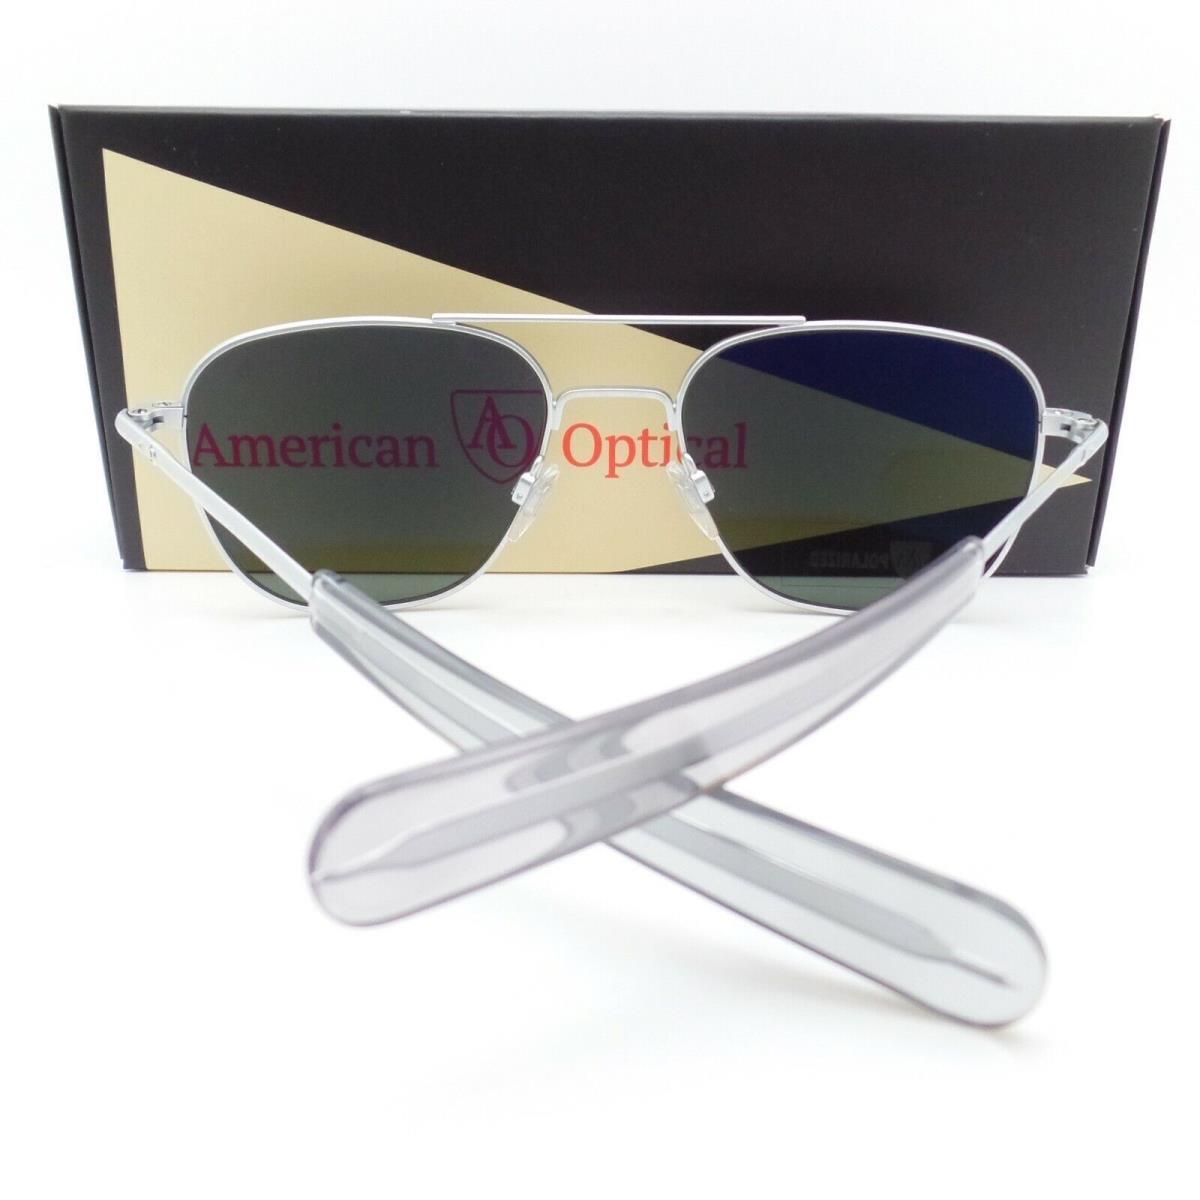 American Optical Original Pilot AO American Optical Pilot Matte Silver Green Lens Option Sunglasses - Frame: Matte Silver, Lens: Calobar Green